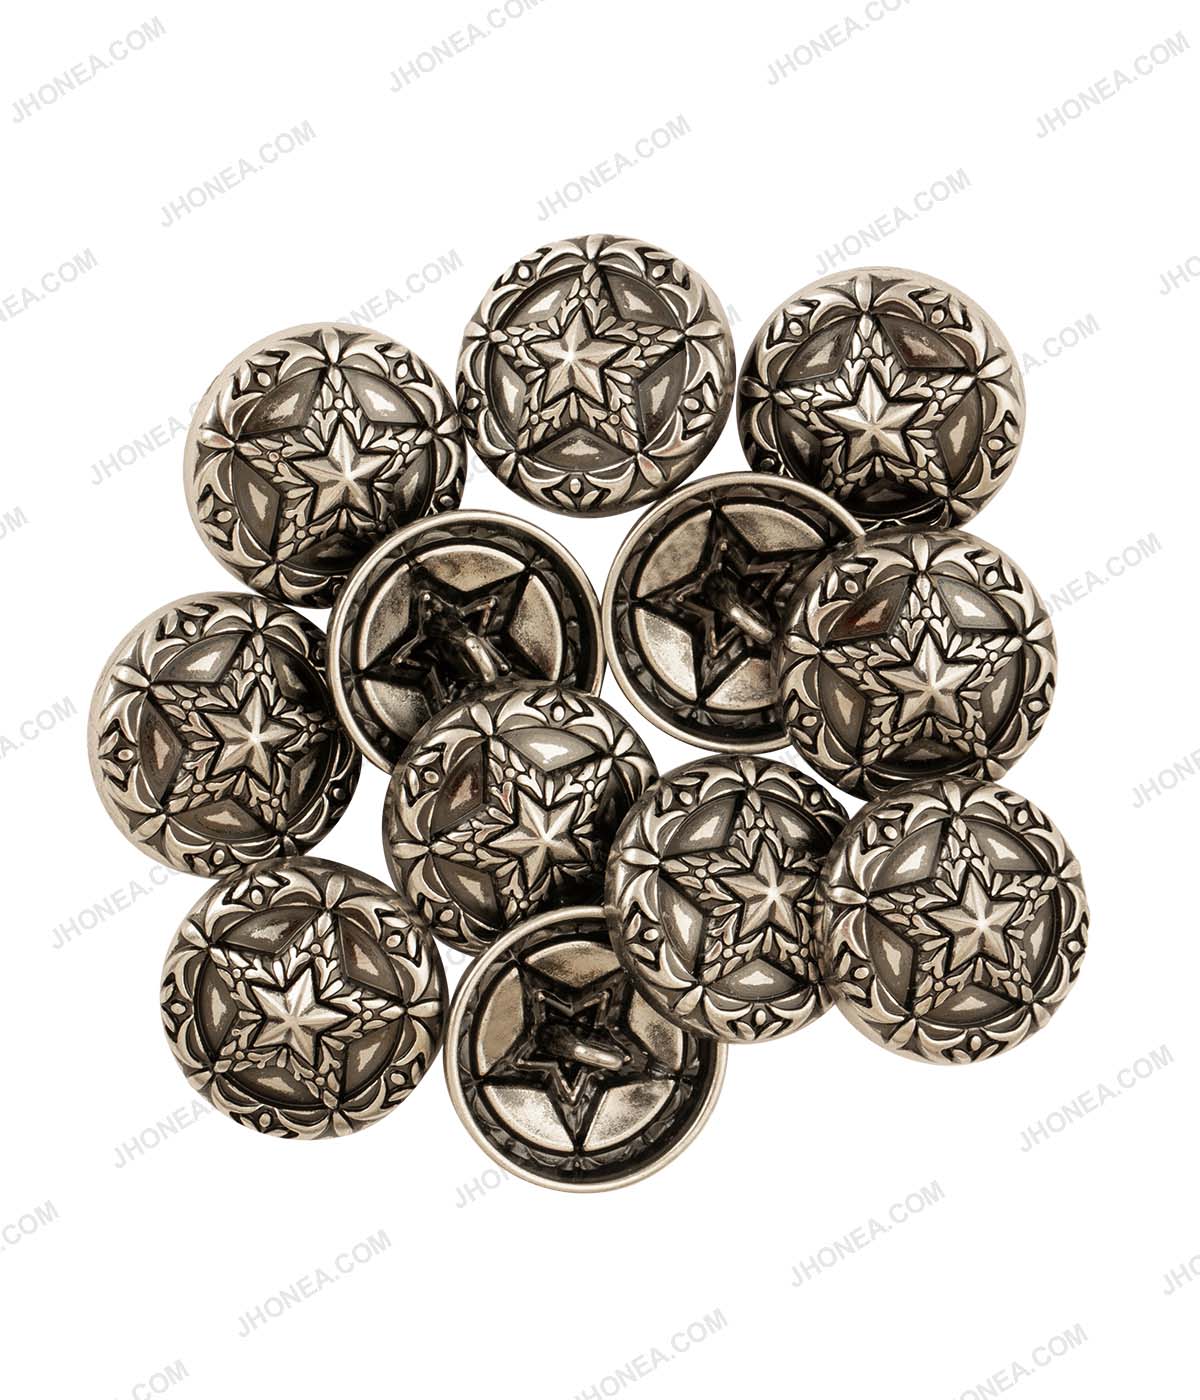 Premium Antique Vintage Star Design Metal Buttons for Coats in Antique Silver Color